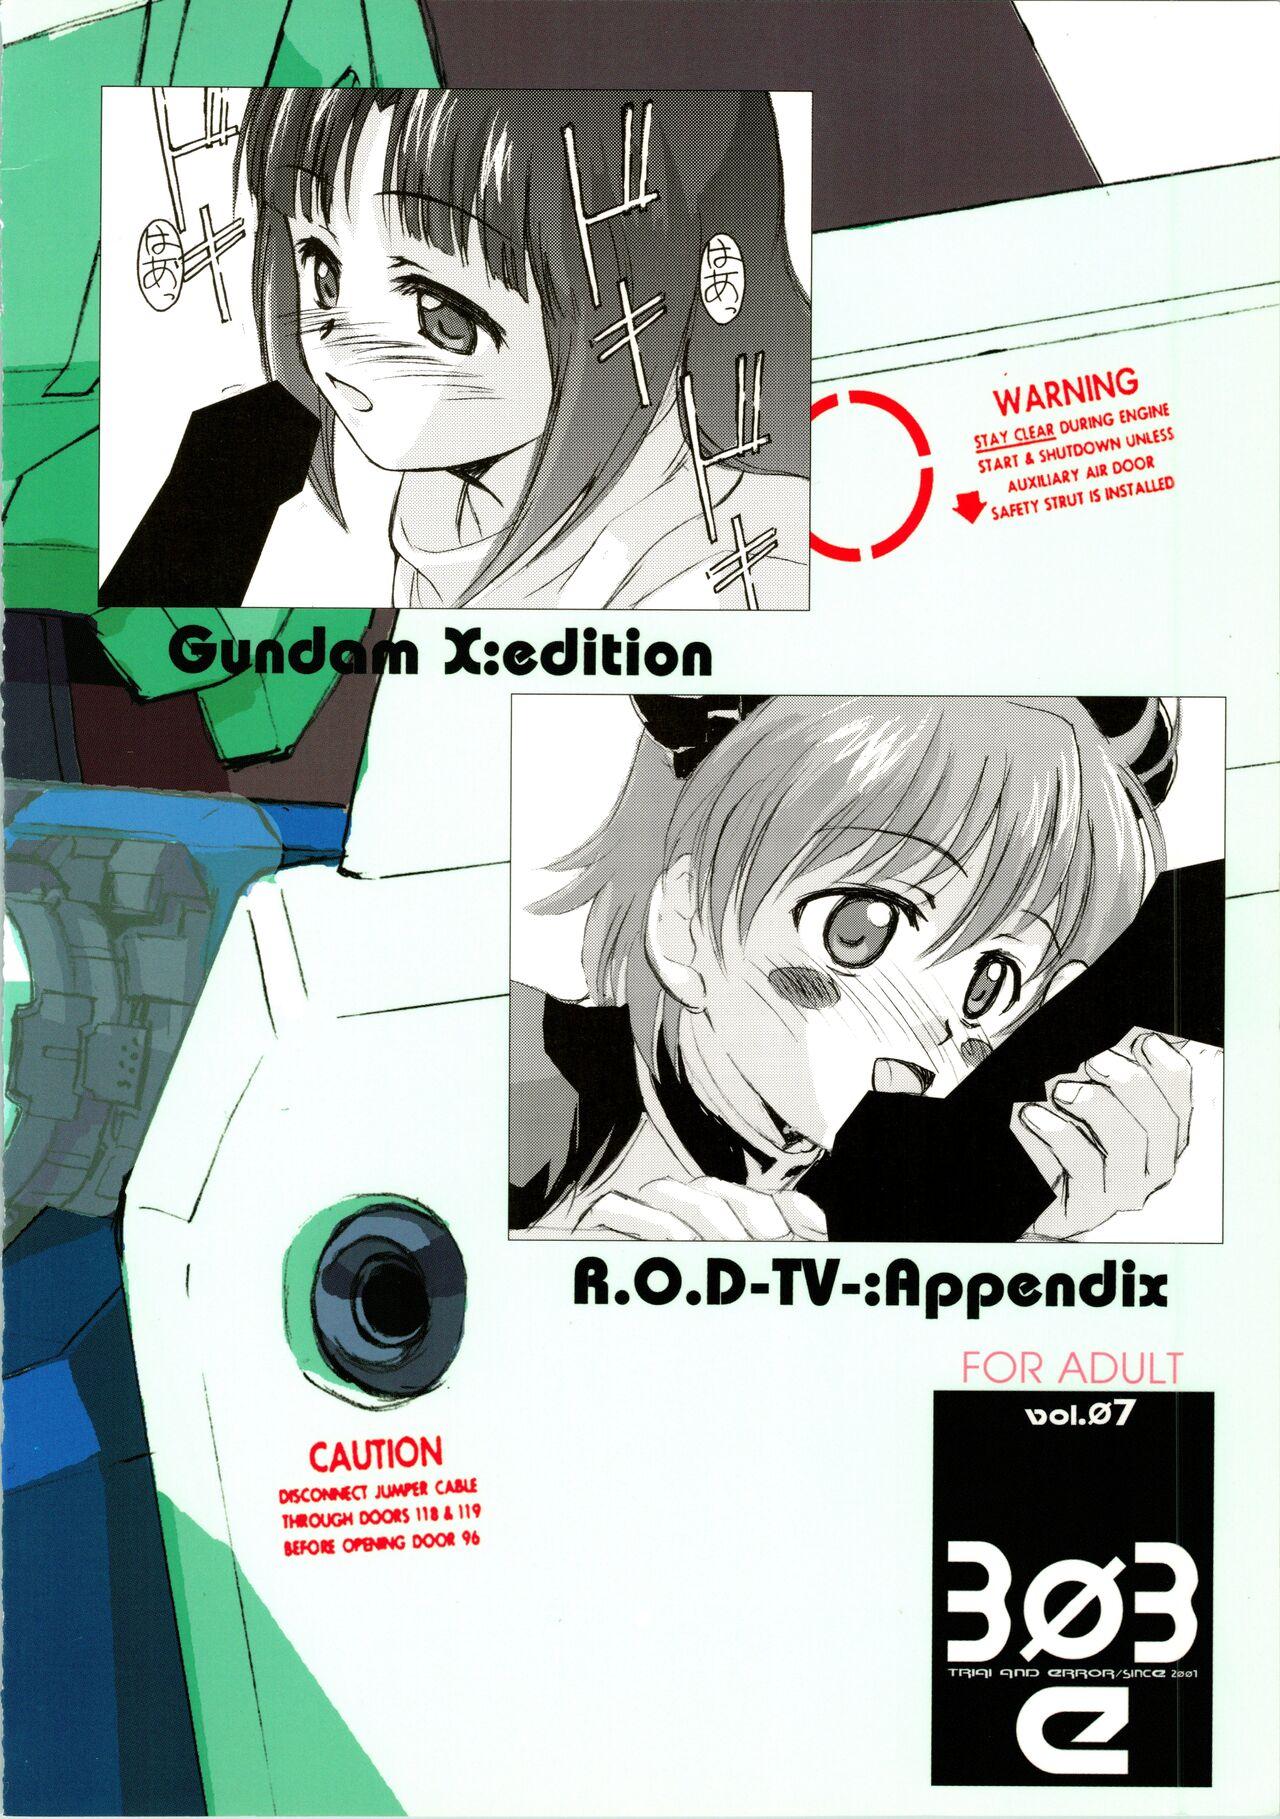 Cei [WINDFALL (Aburaage)] 303e Vol. 07 (Gundam X, R.O.D the TV) ZHOA8229 - Read or die Gundam x Fingering - Page 28